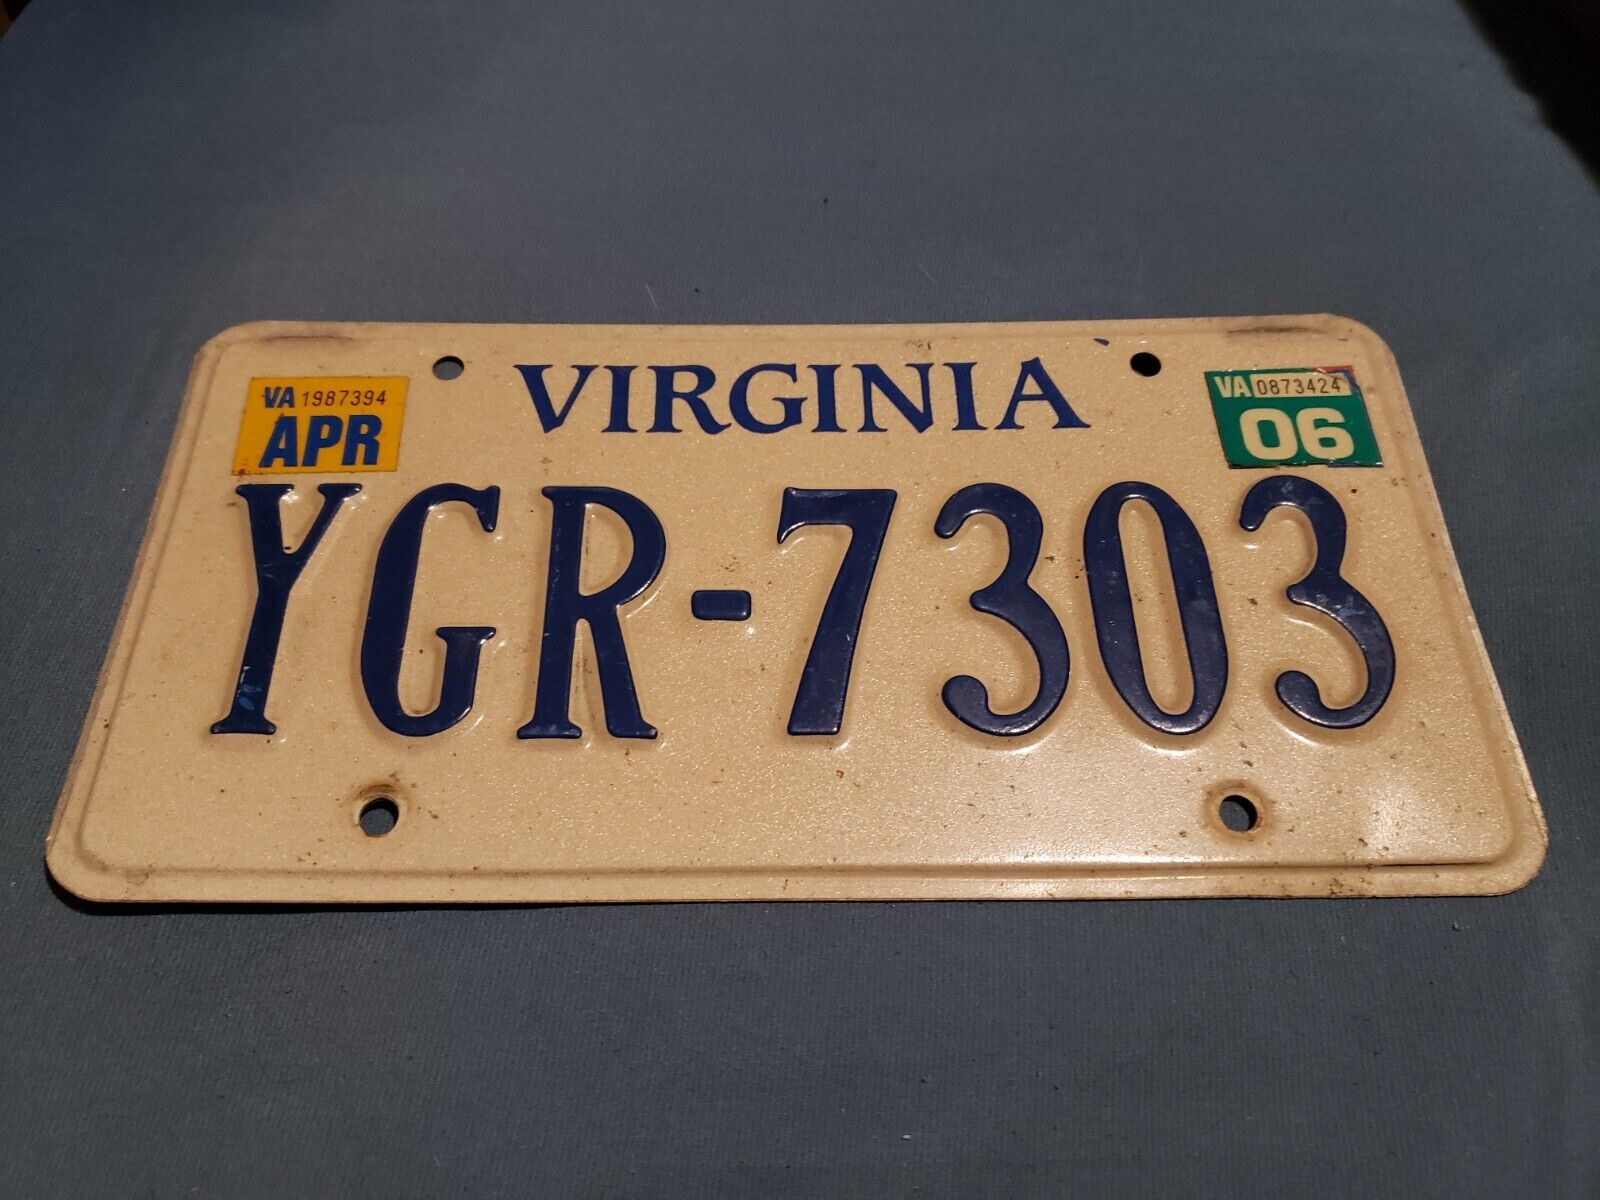 2006 Virginia License Plate # Ygr 7303